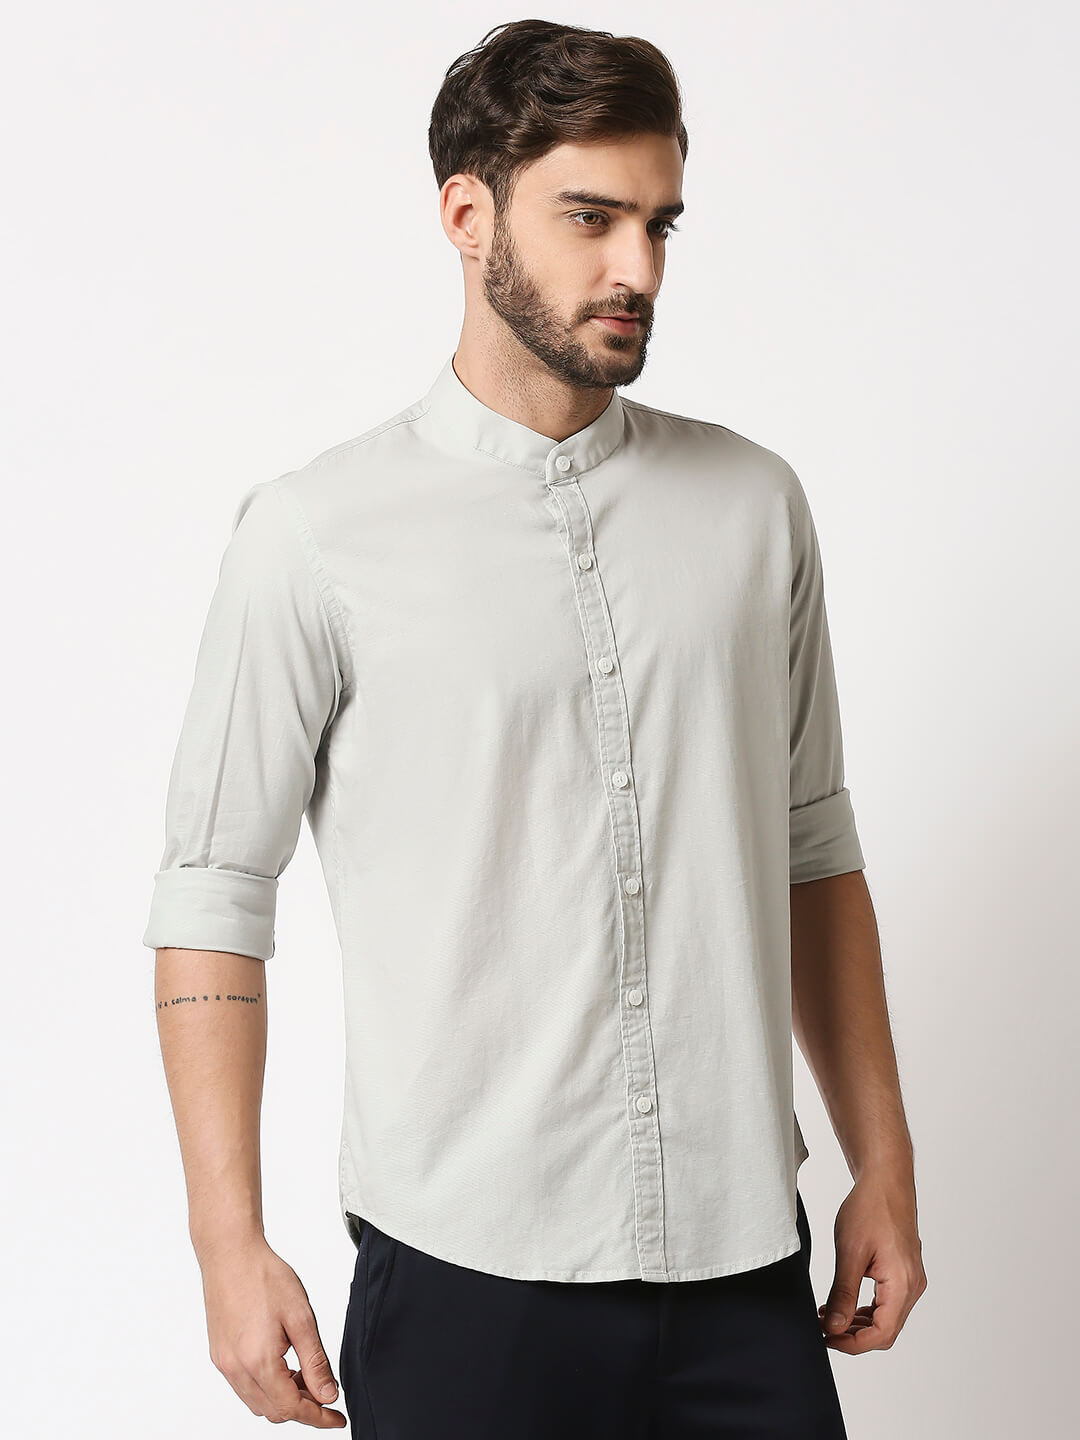 The Manaca Mandarin Collar Plain Shirt - Grey